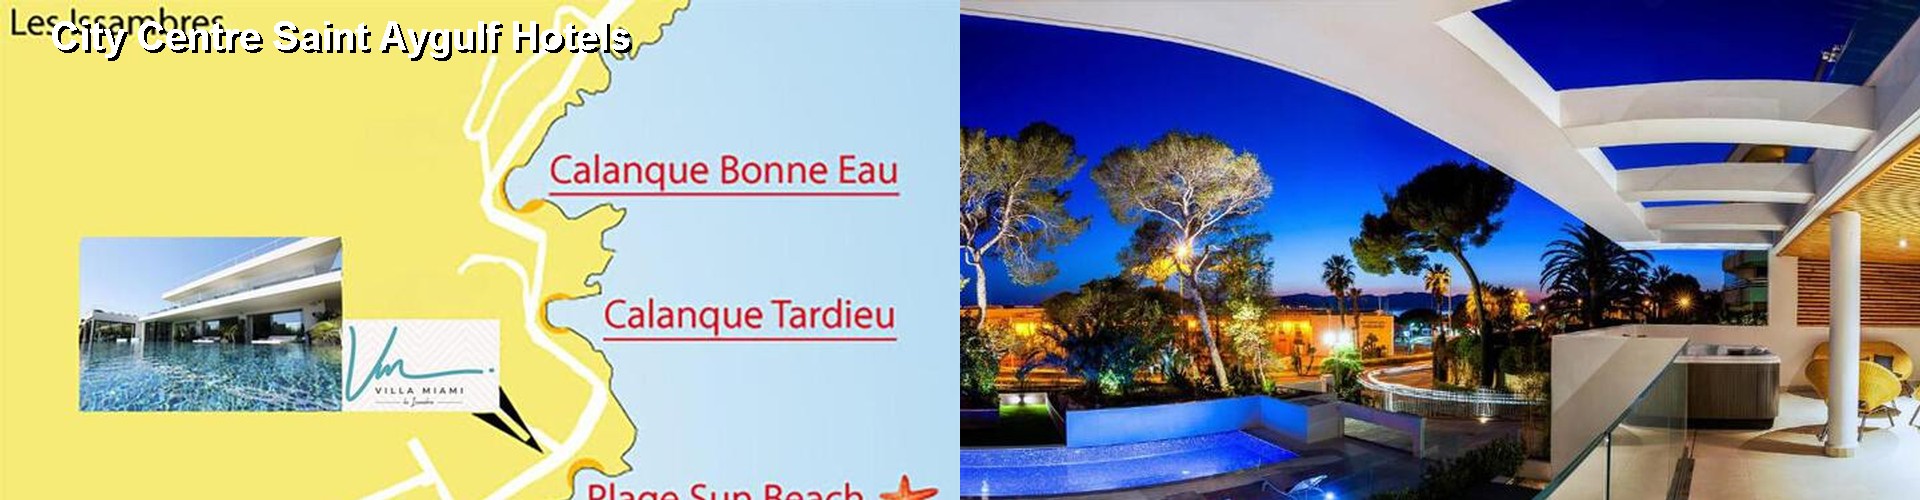 5 Best Hotels near City Centre Saint Aygulf